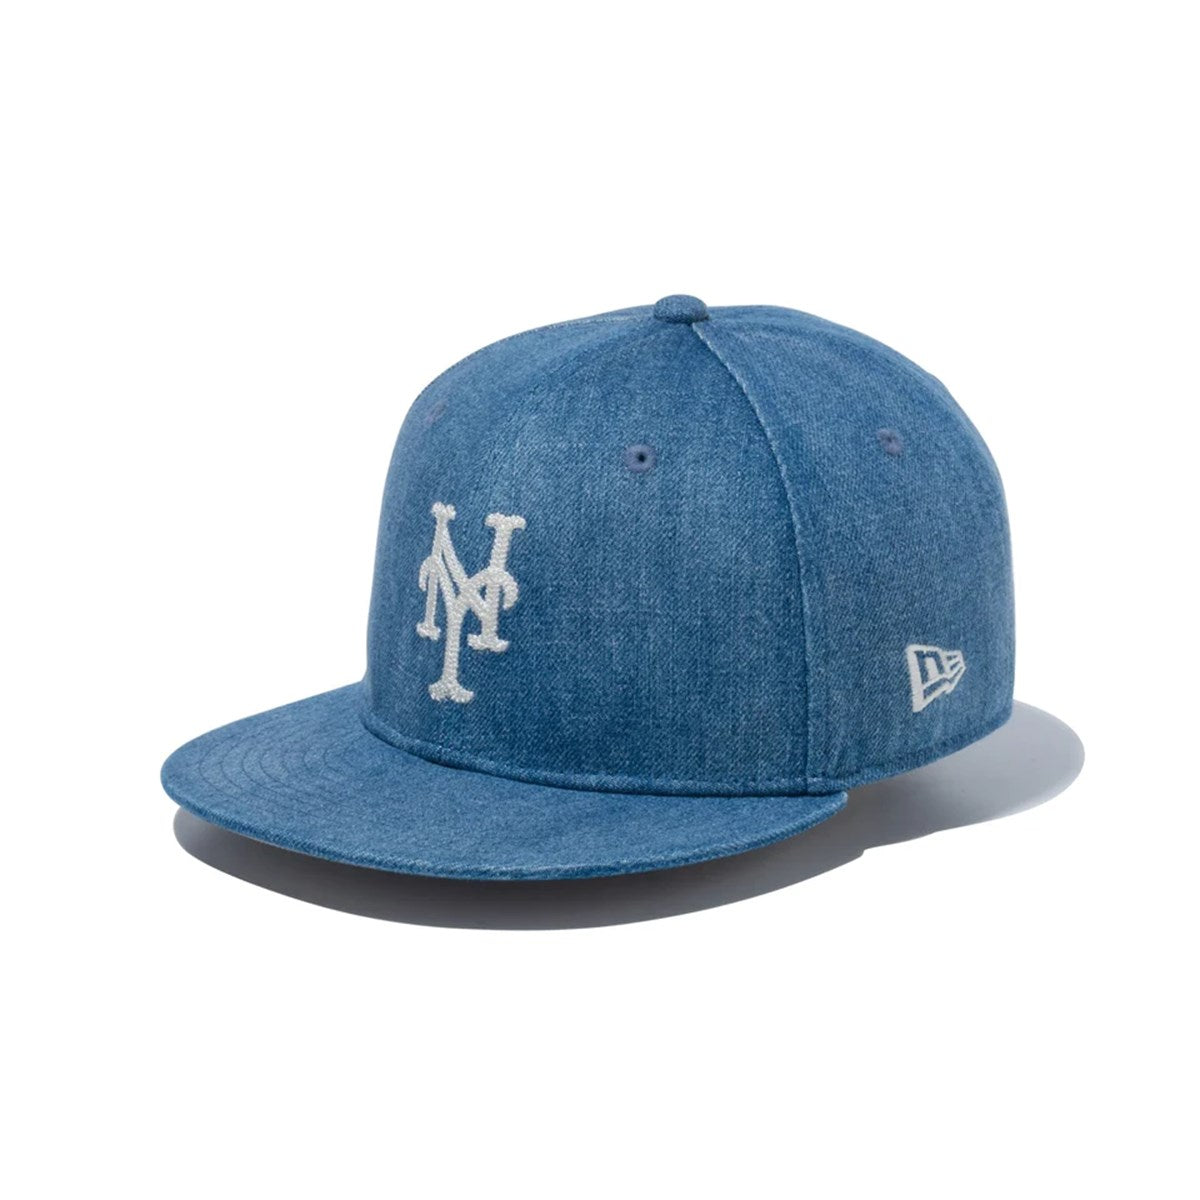 【KIDS】NEW ERA New York Mets - YOUTH 9FIFTY SUBWAY WASDEN【14111887】